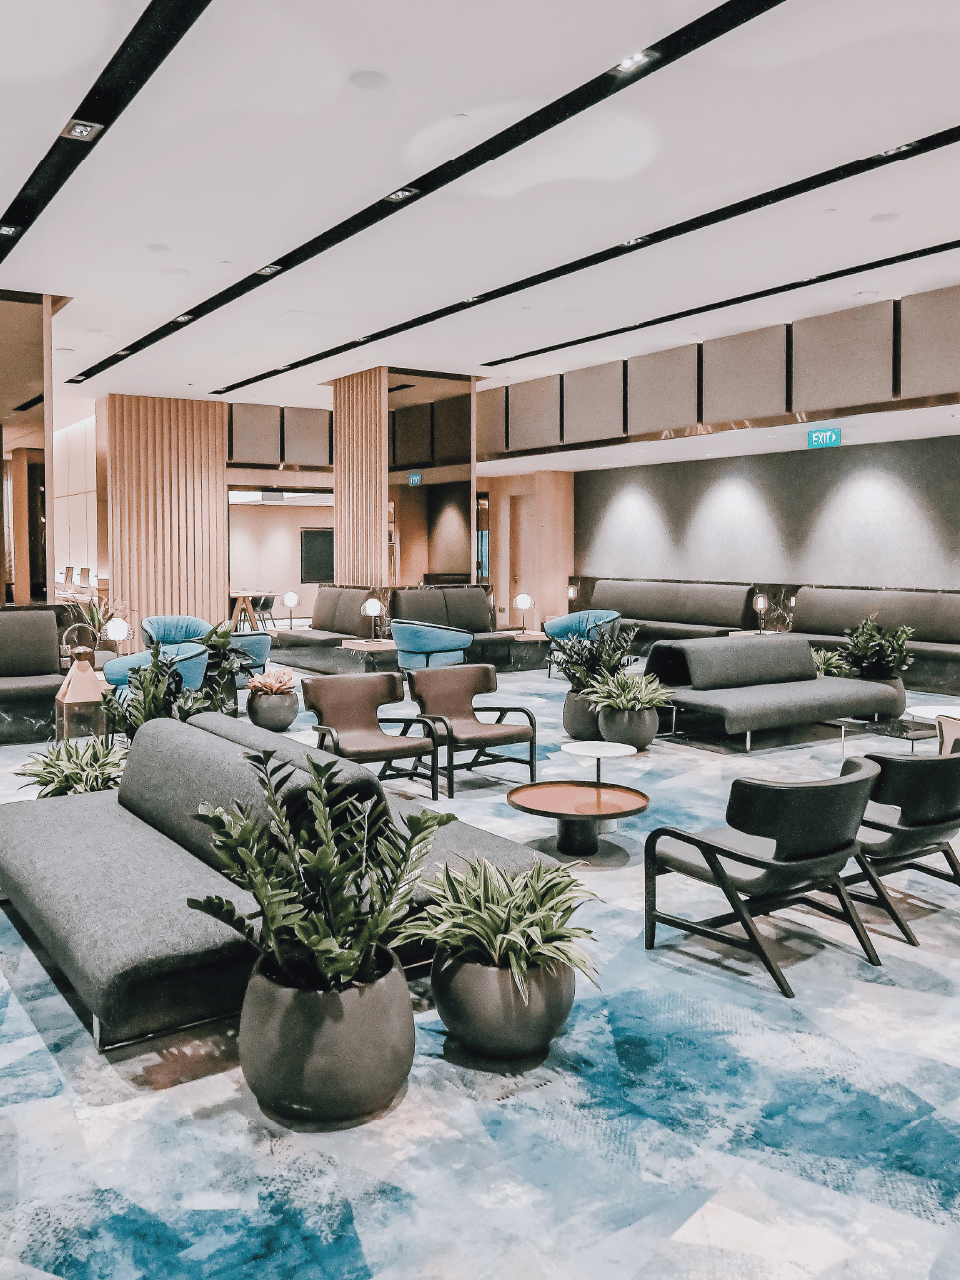 changi lounge study place in jewel changi airport singapore